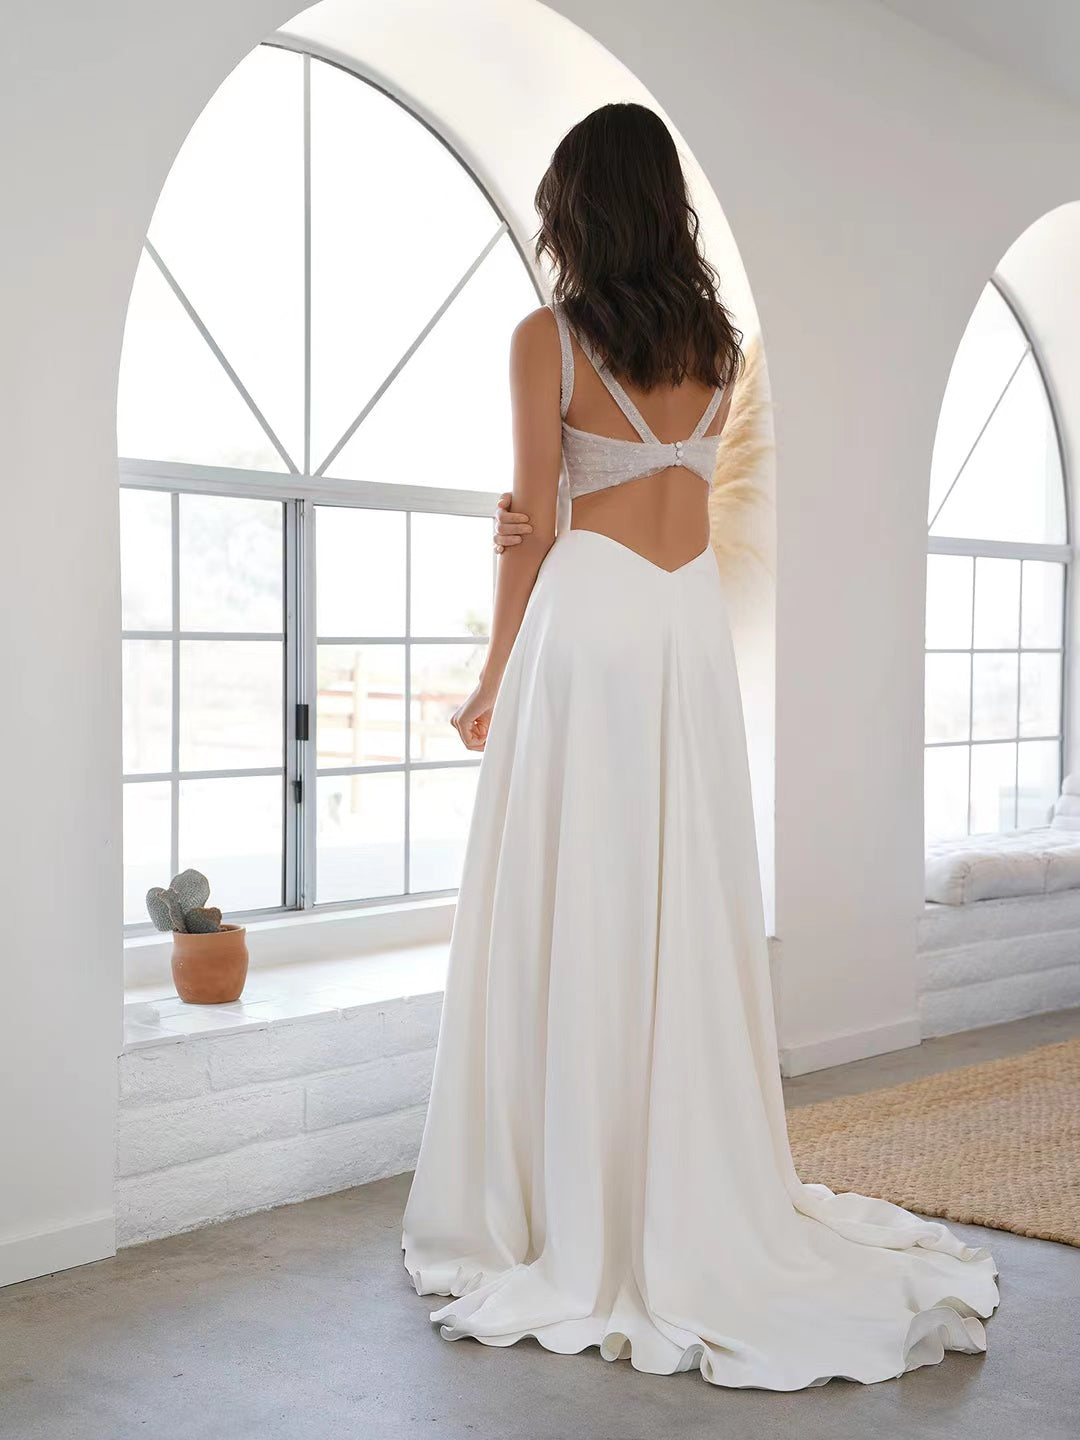 Newest 2022 Simple Wedding Dresses, A-line Fashion Bridal Gowns, High Quality Wedding Gowns